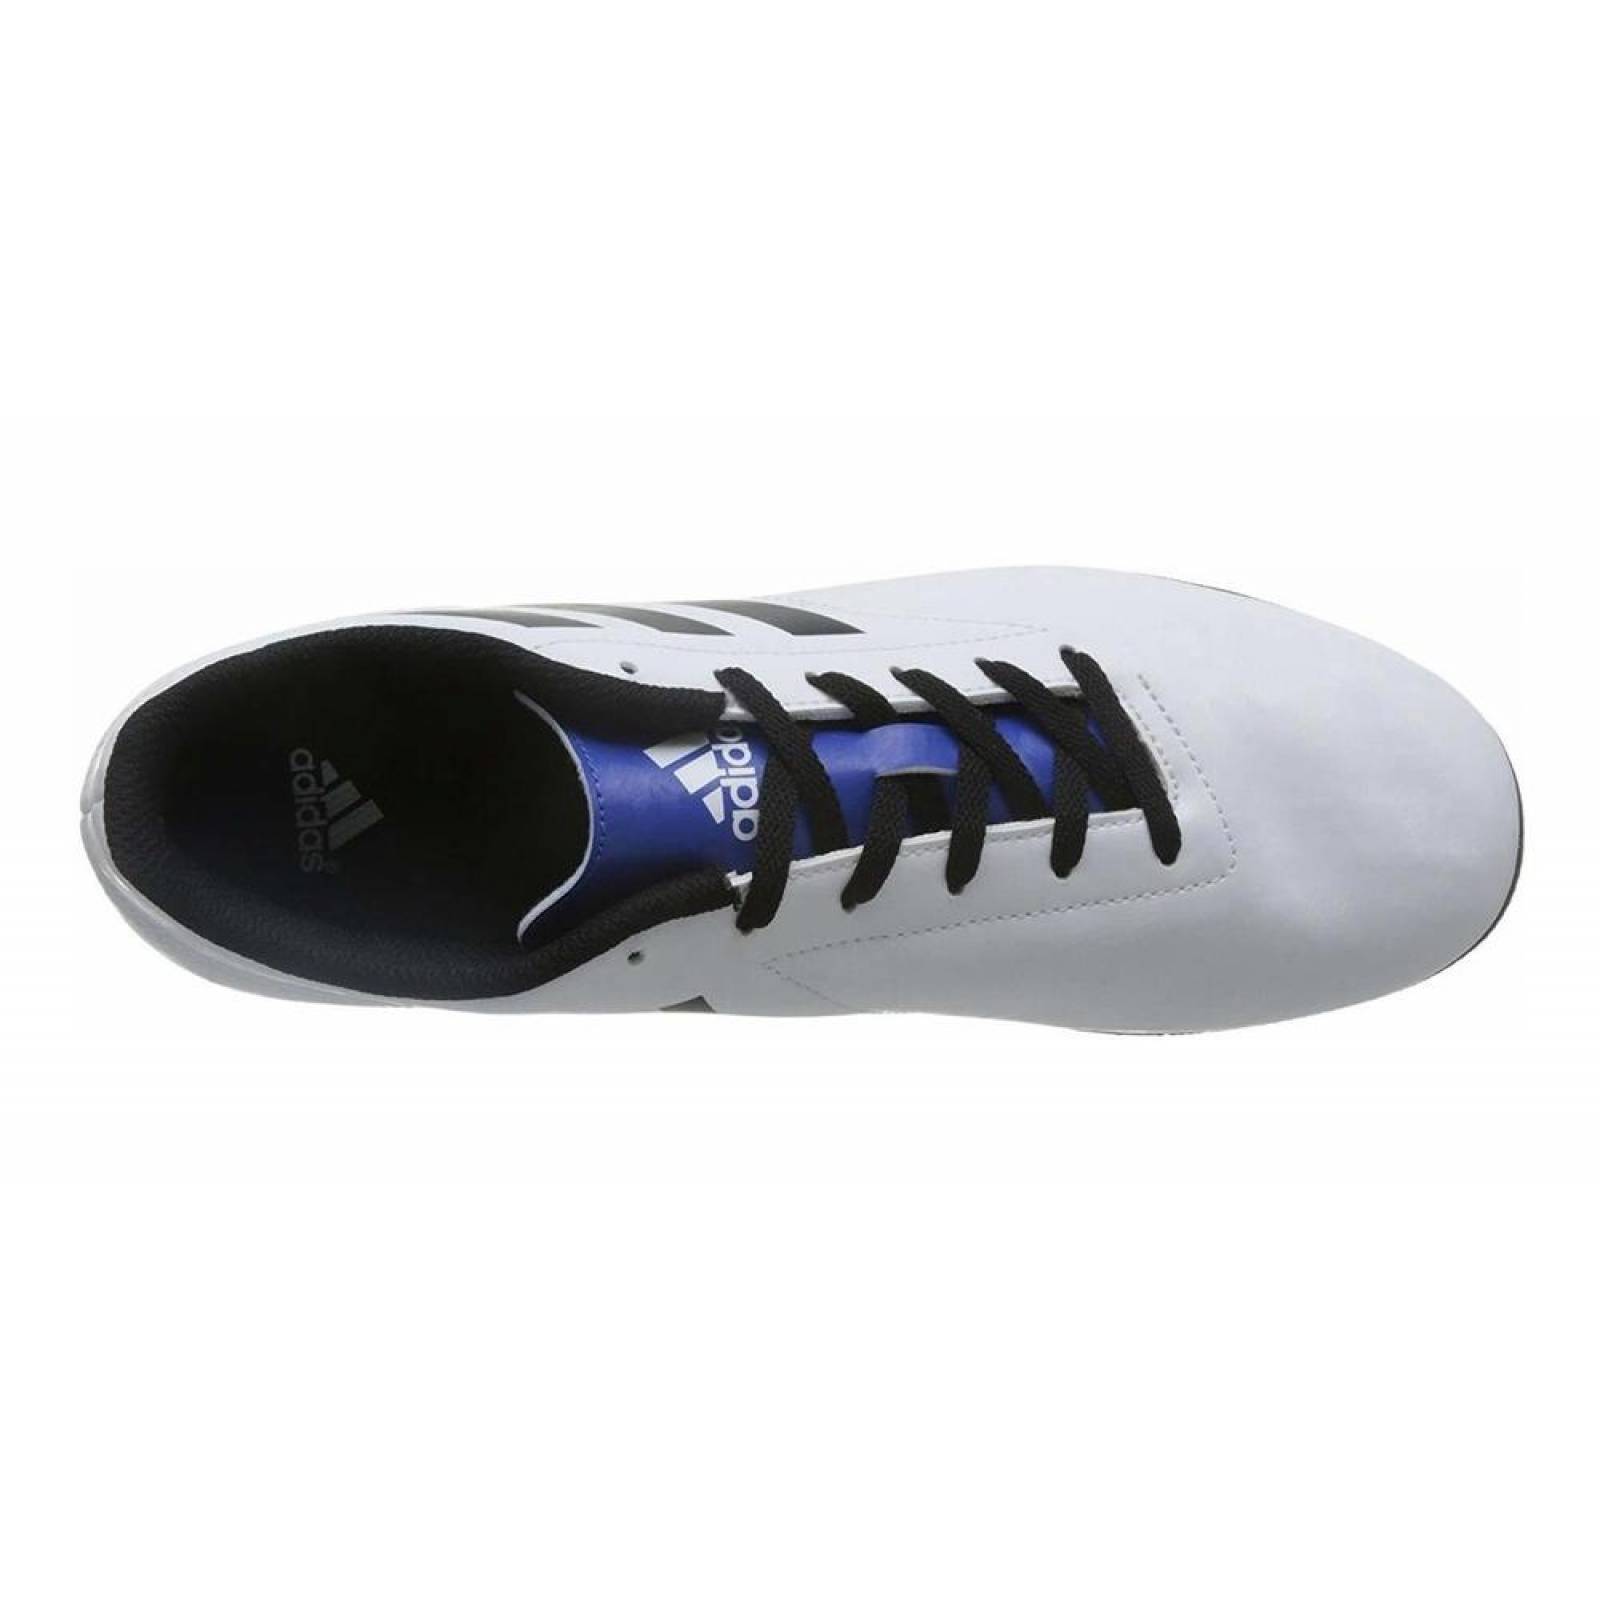 Zapatos de Futbol Pasto Sintético Adidas Conquisto BB0561 Blanco Hombre 